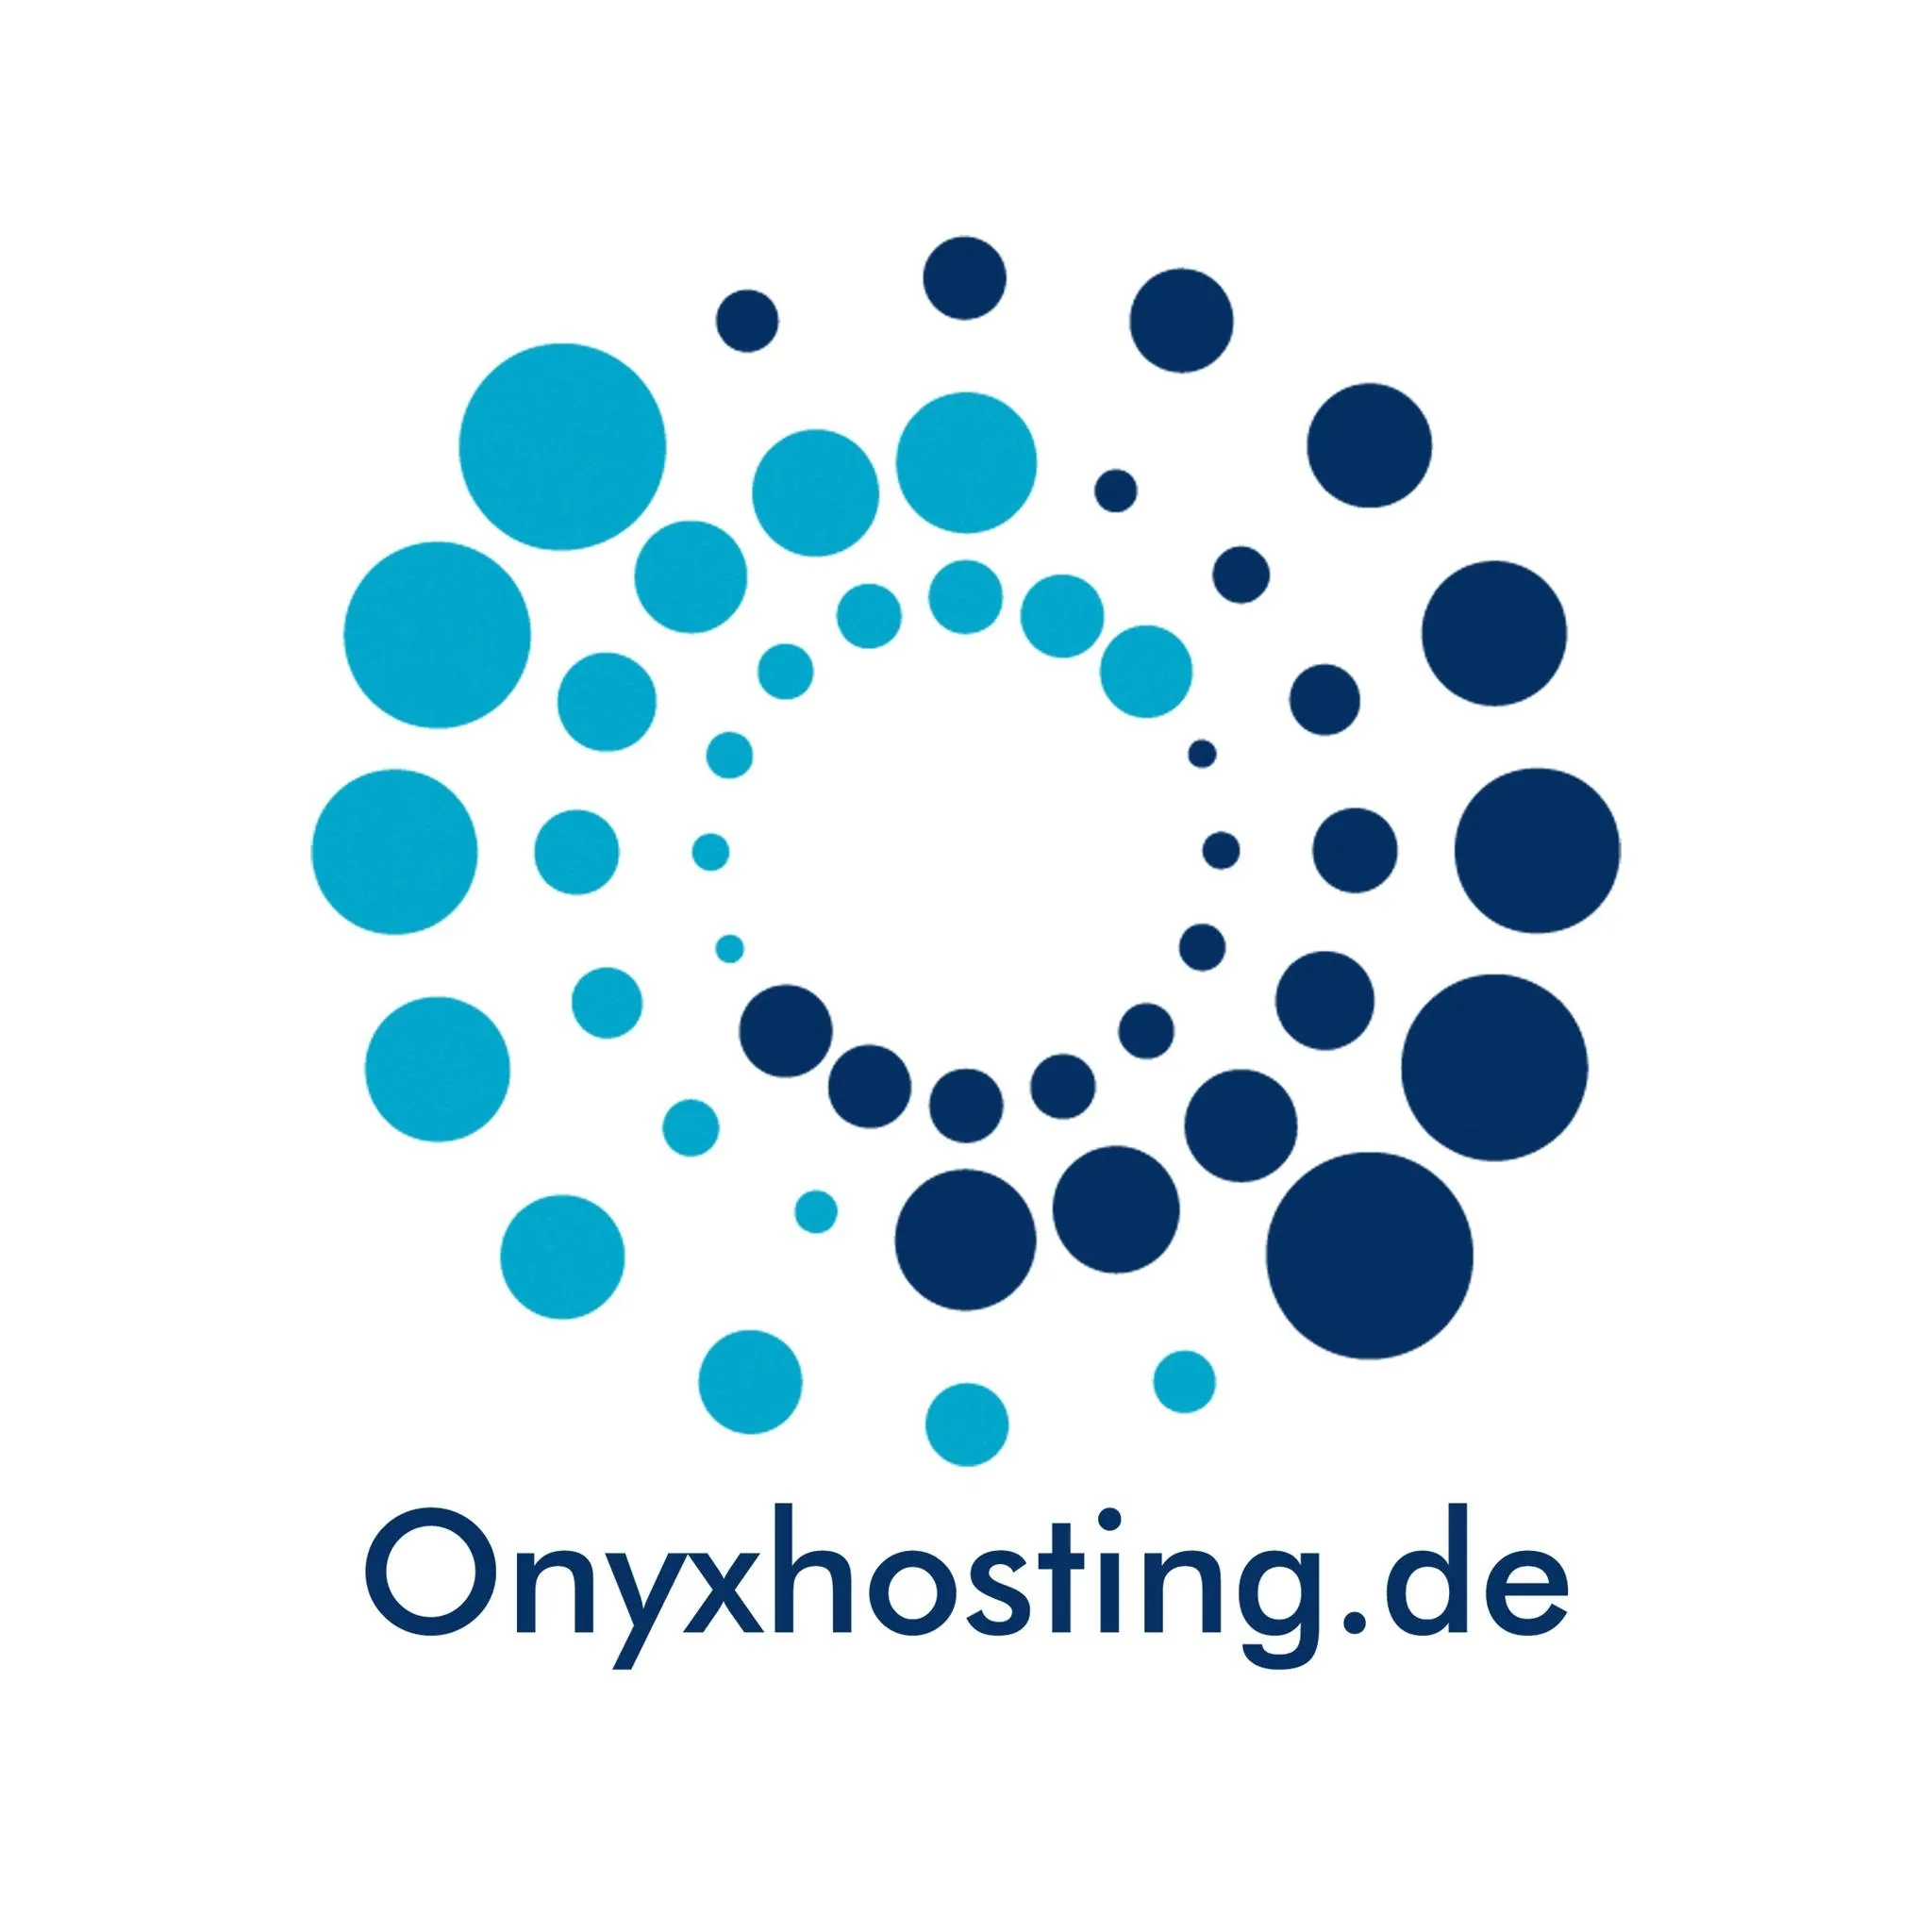 onyxhosting.de